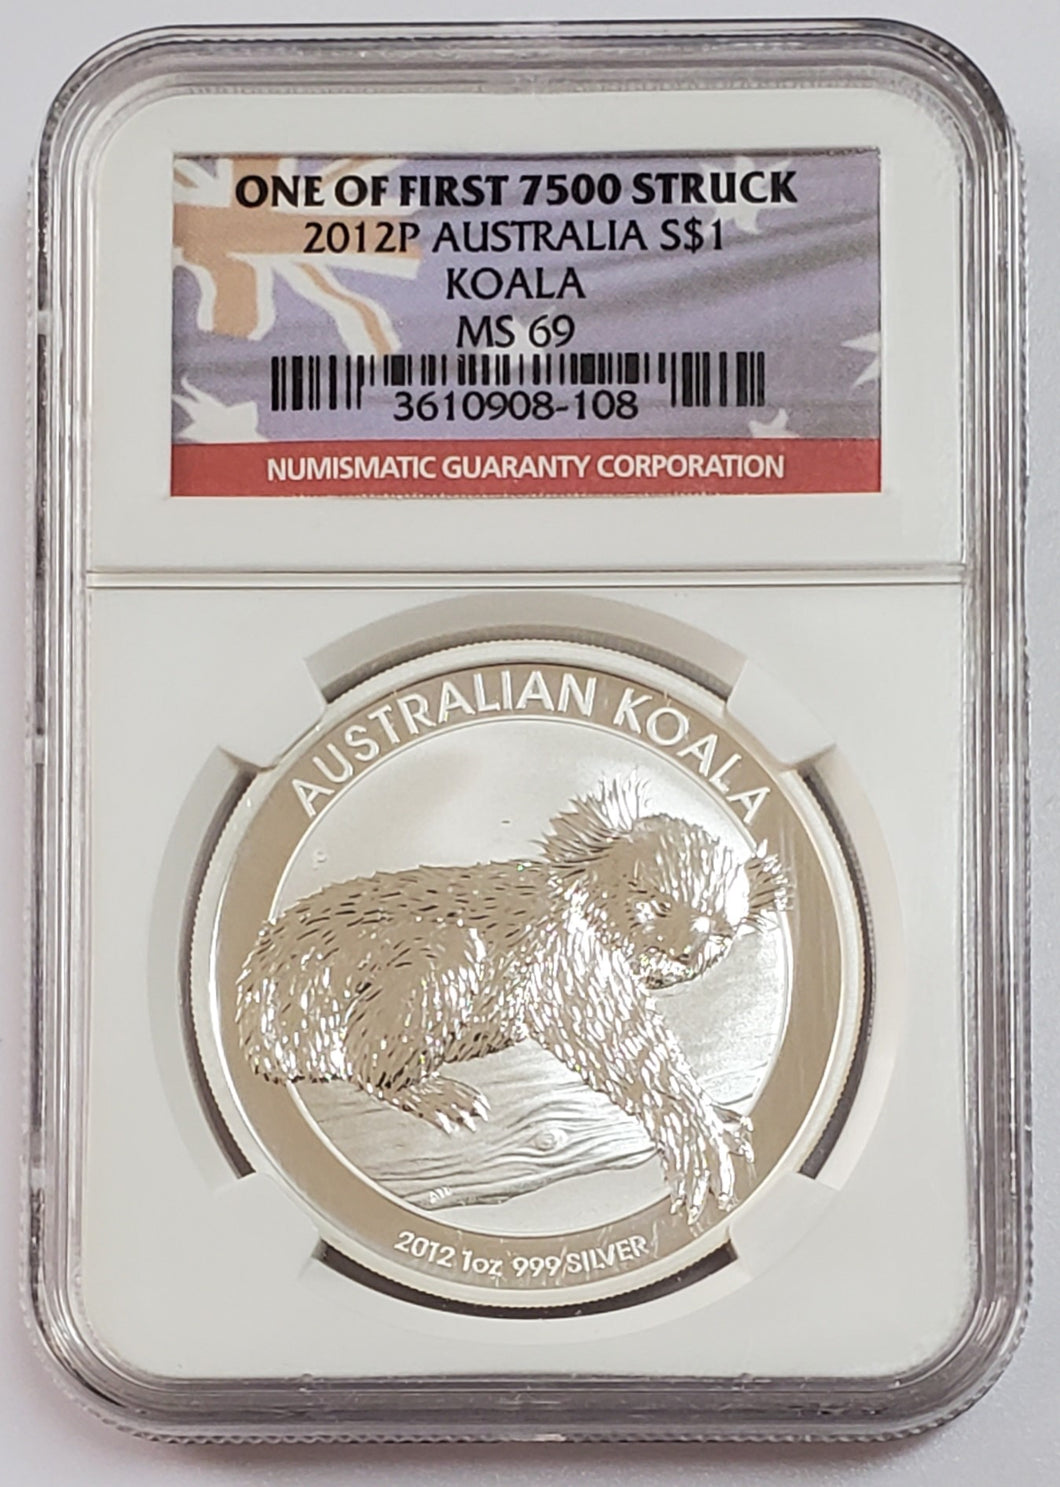 2012 P 1 Oz Fine Silver Koala Australia $1 One of First 7500 Struck NGC MS 69